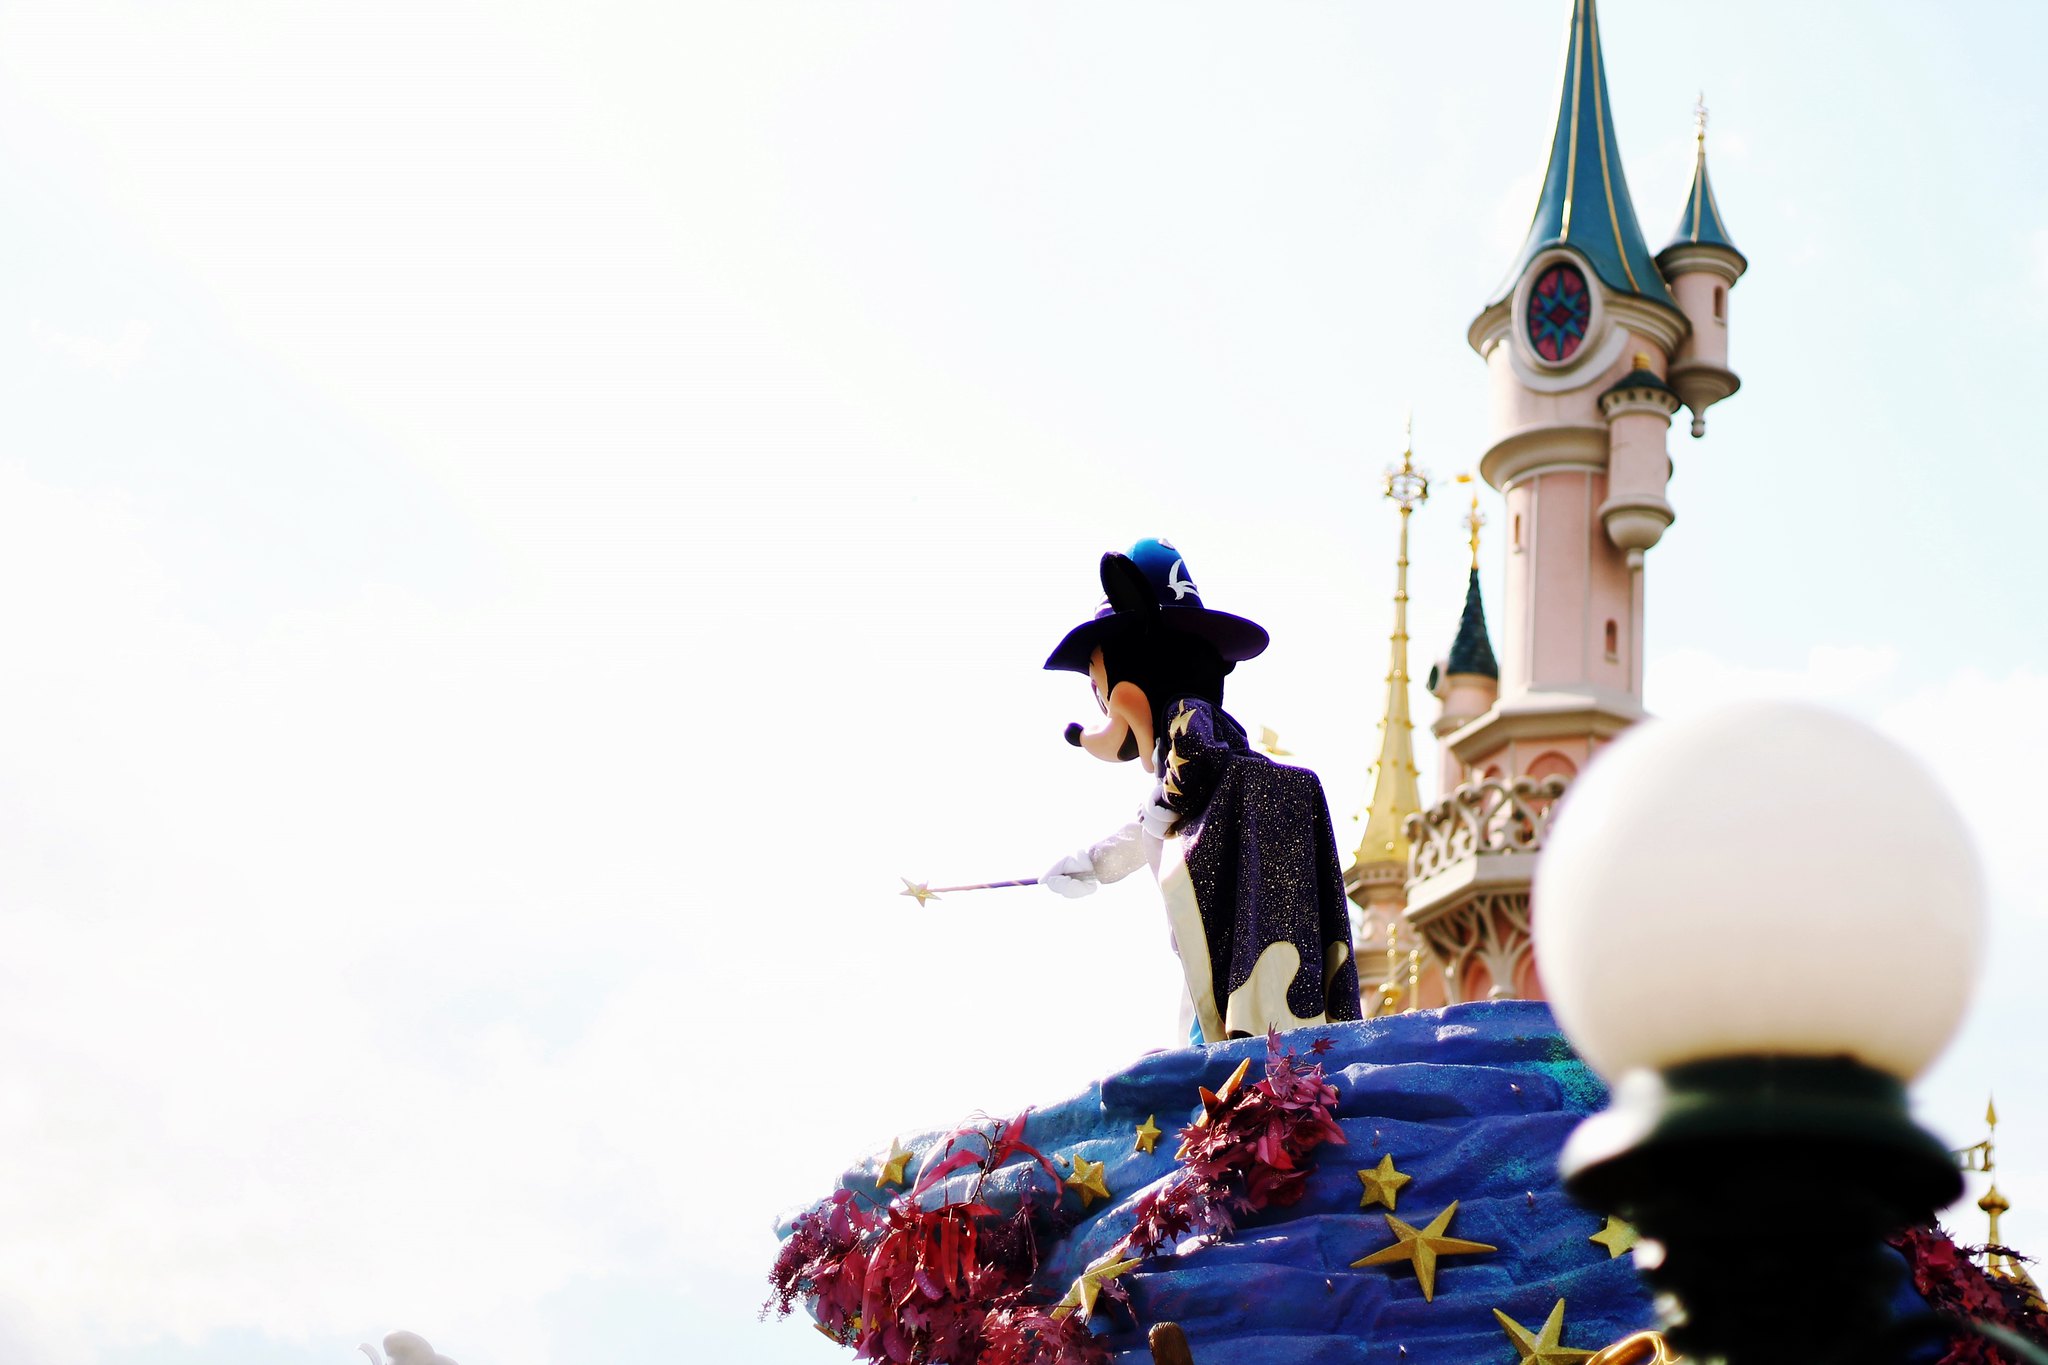 25º aniversário Disneyland Paris - Drawing Dreaming